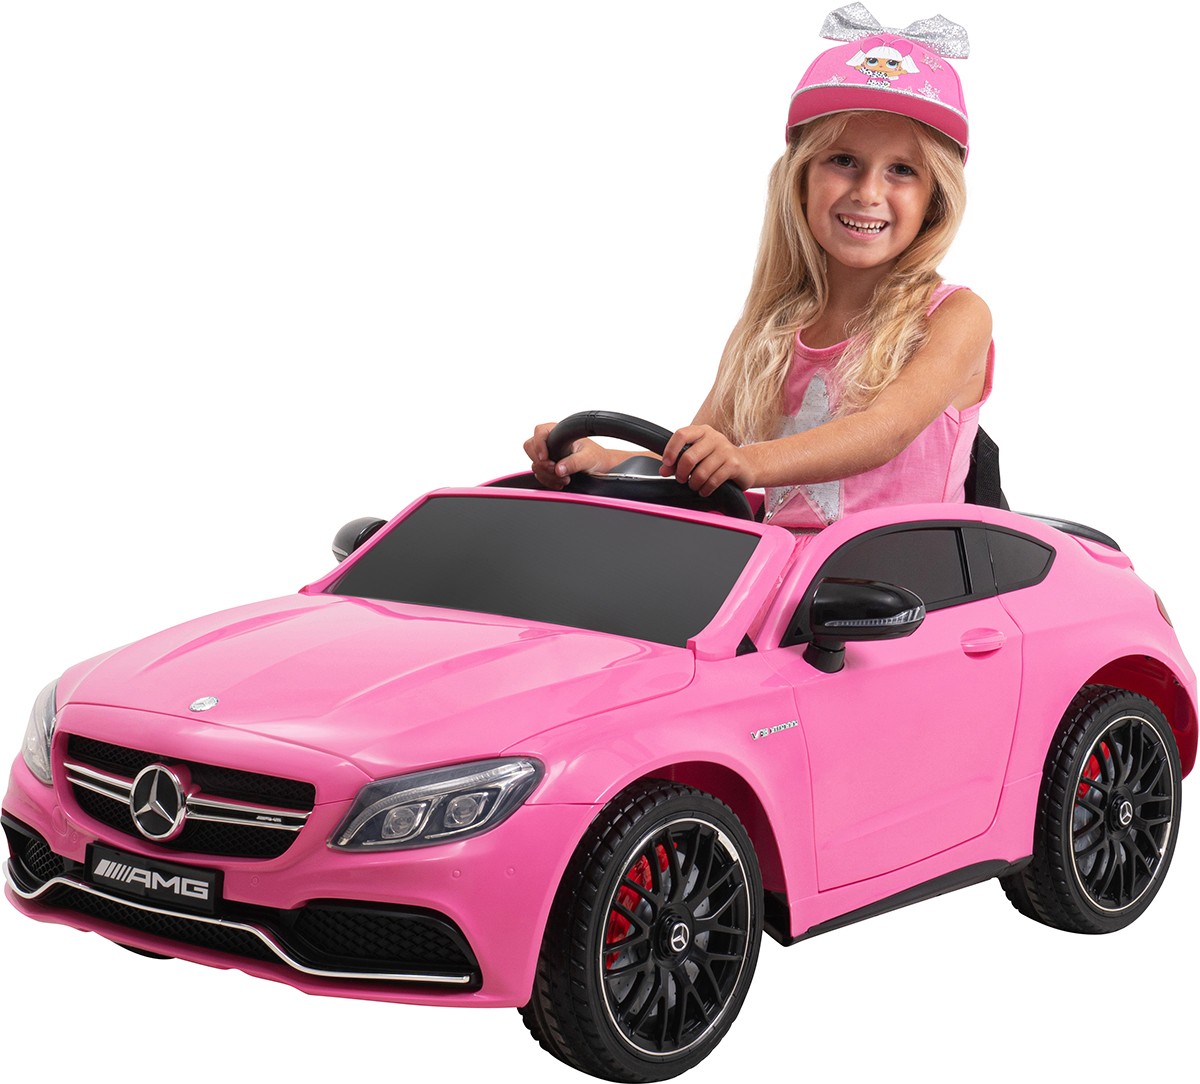 01-kinderelektrofahrzeuge-pink-actionbikesmotors-mercedes-amg-c63-vorne-links